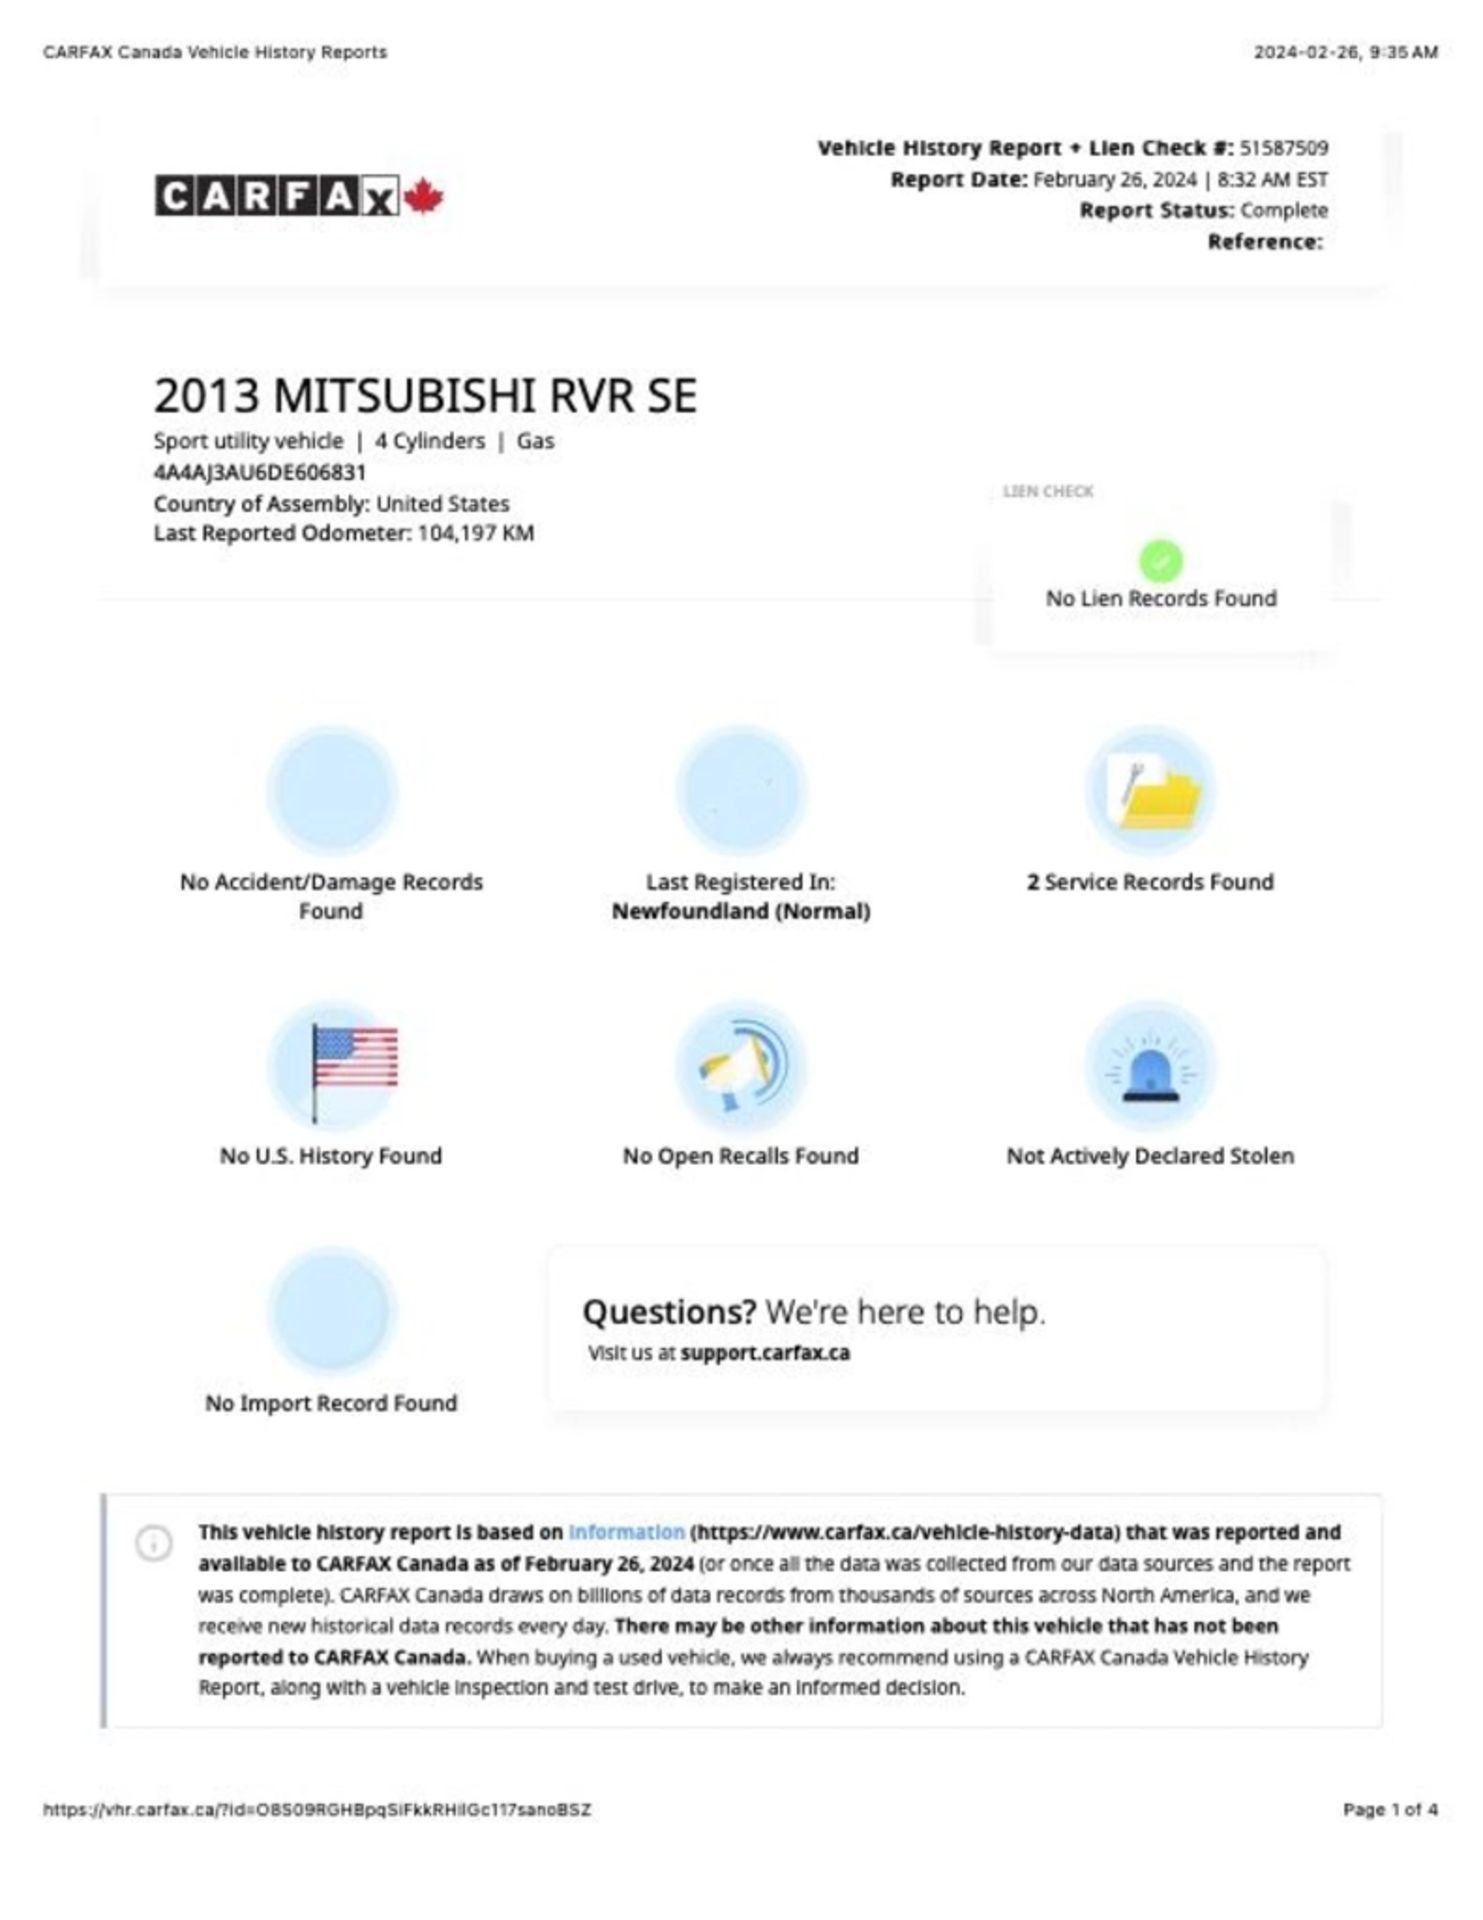 2013 MITSUBISHI RVR SE - Image 9 of 11